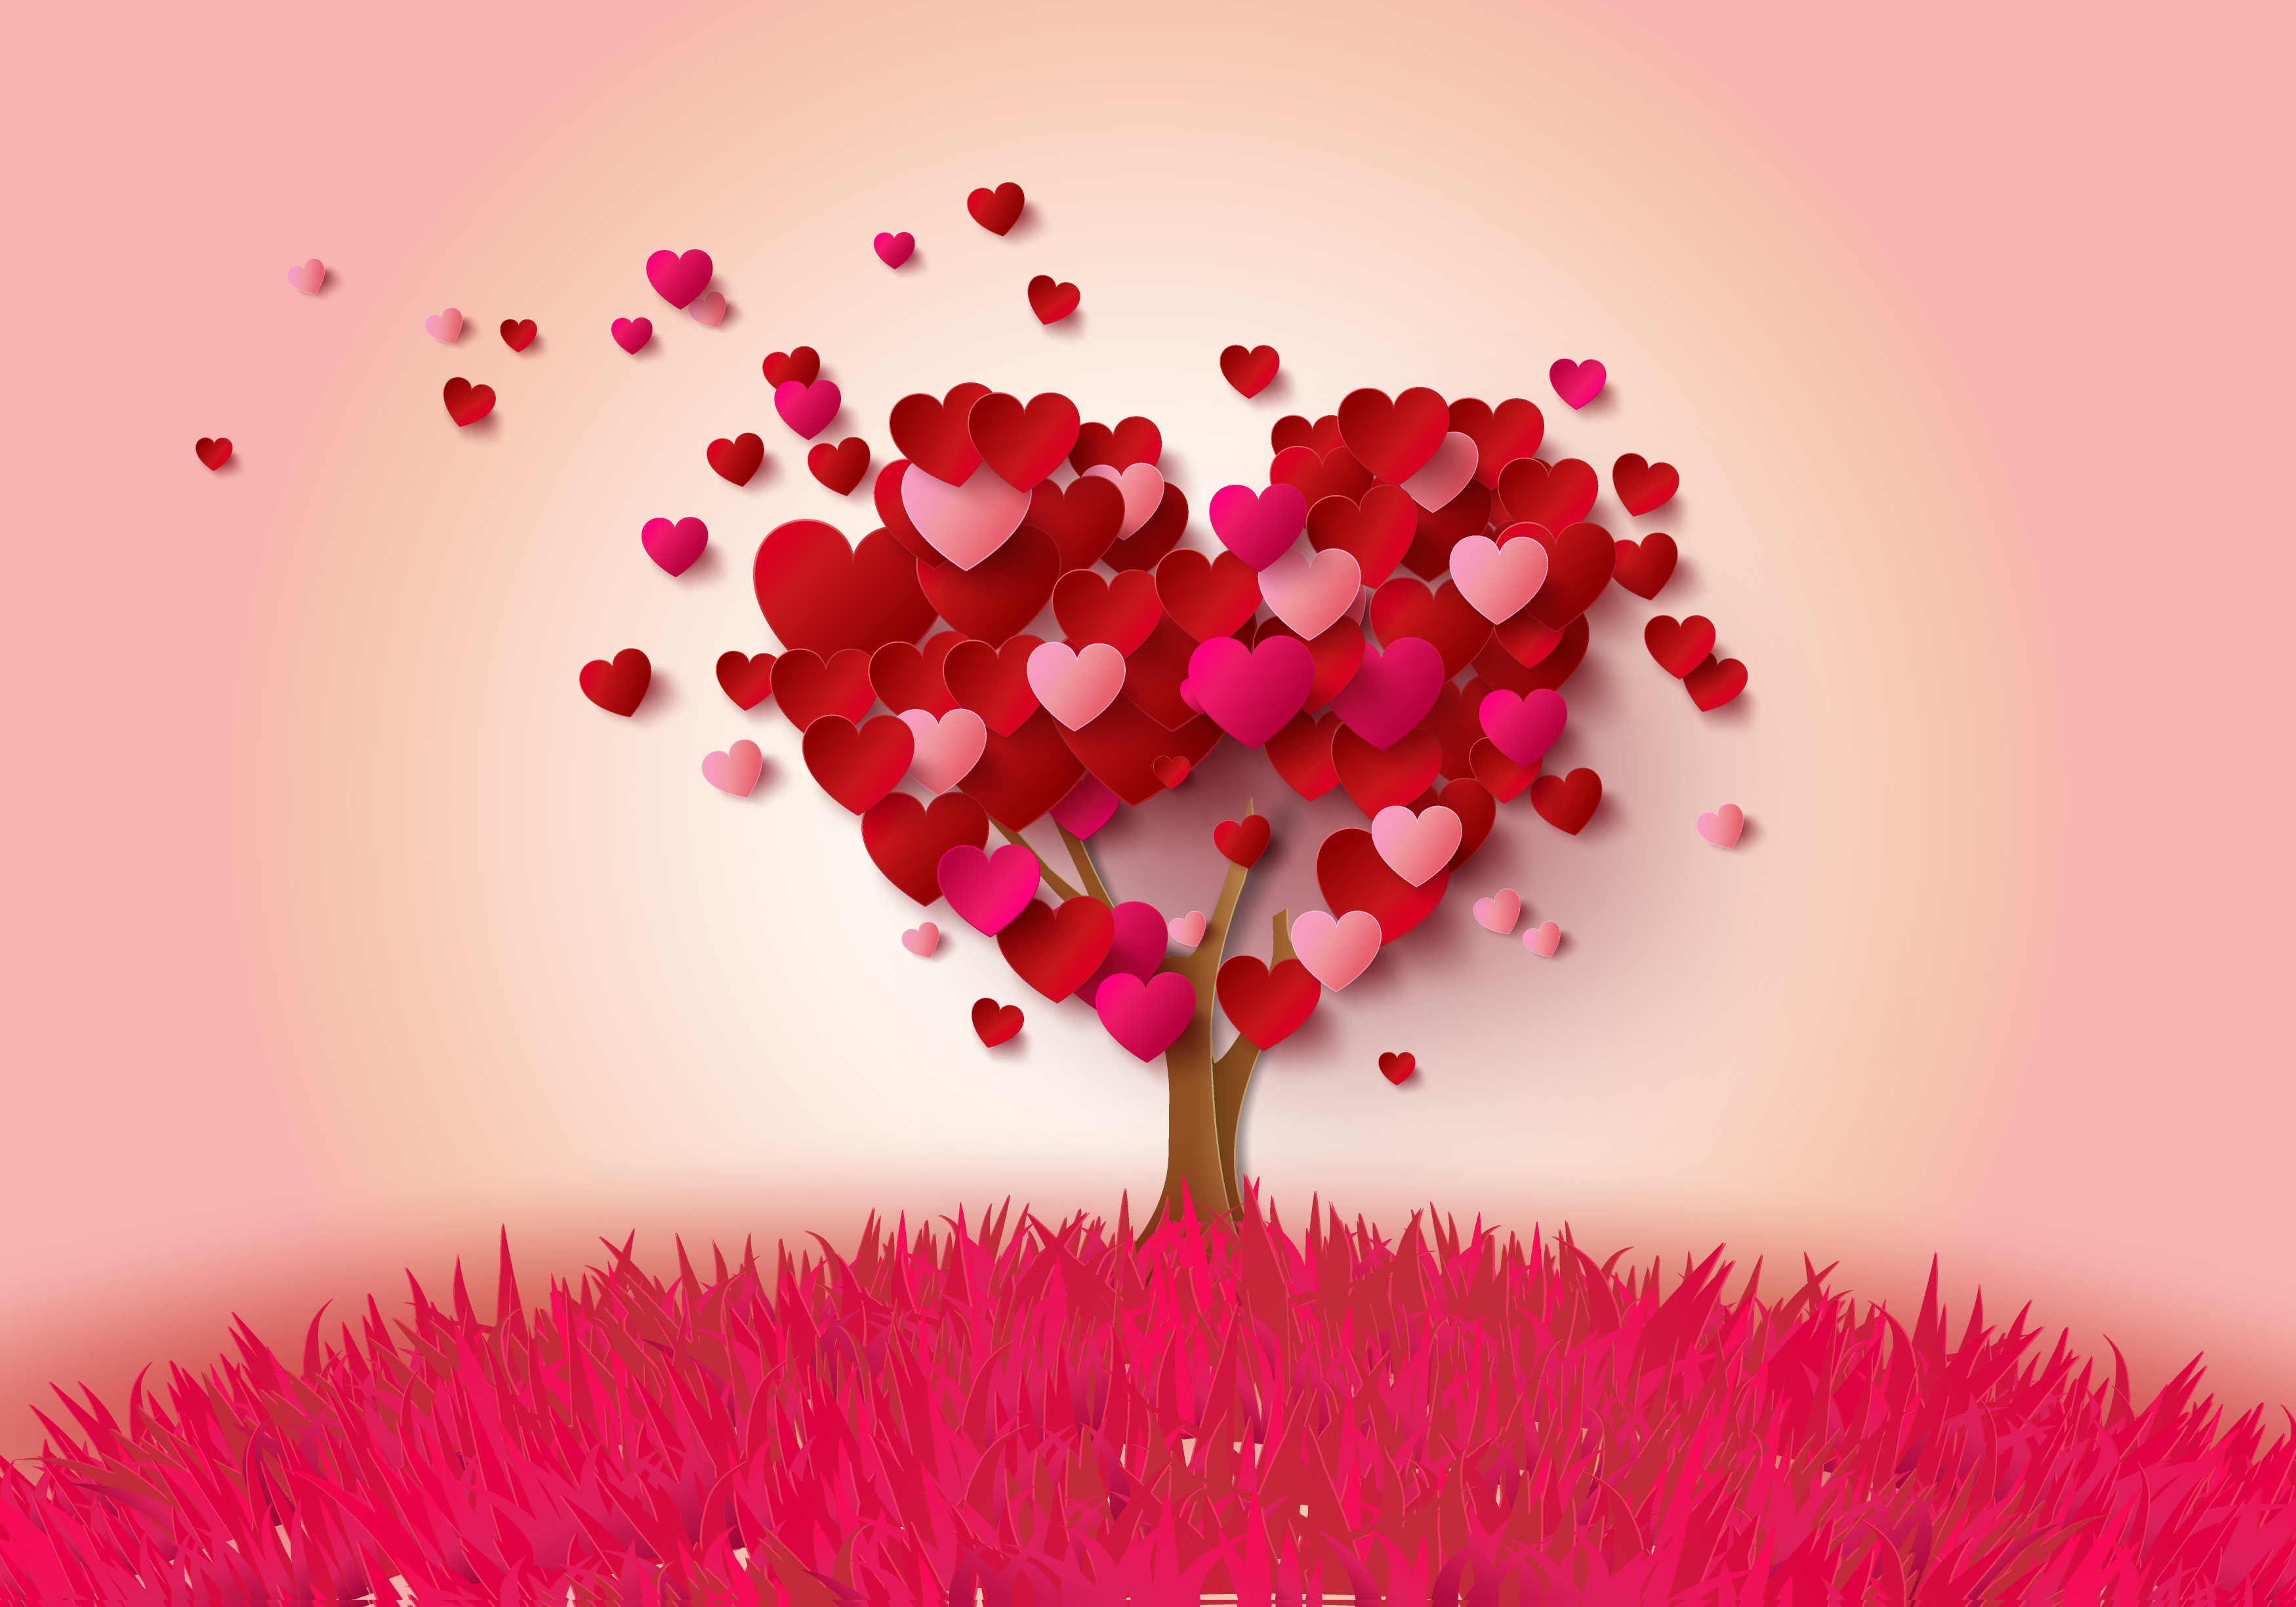 Romantic-love-mood-hearts-wallpaper-cool-photos